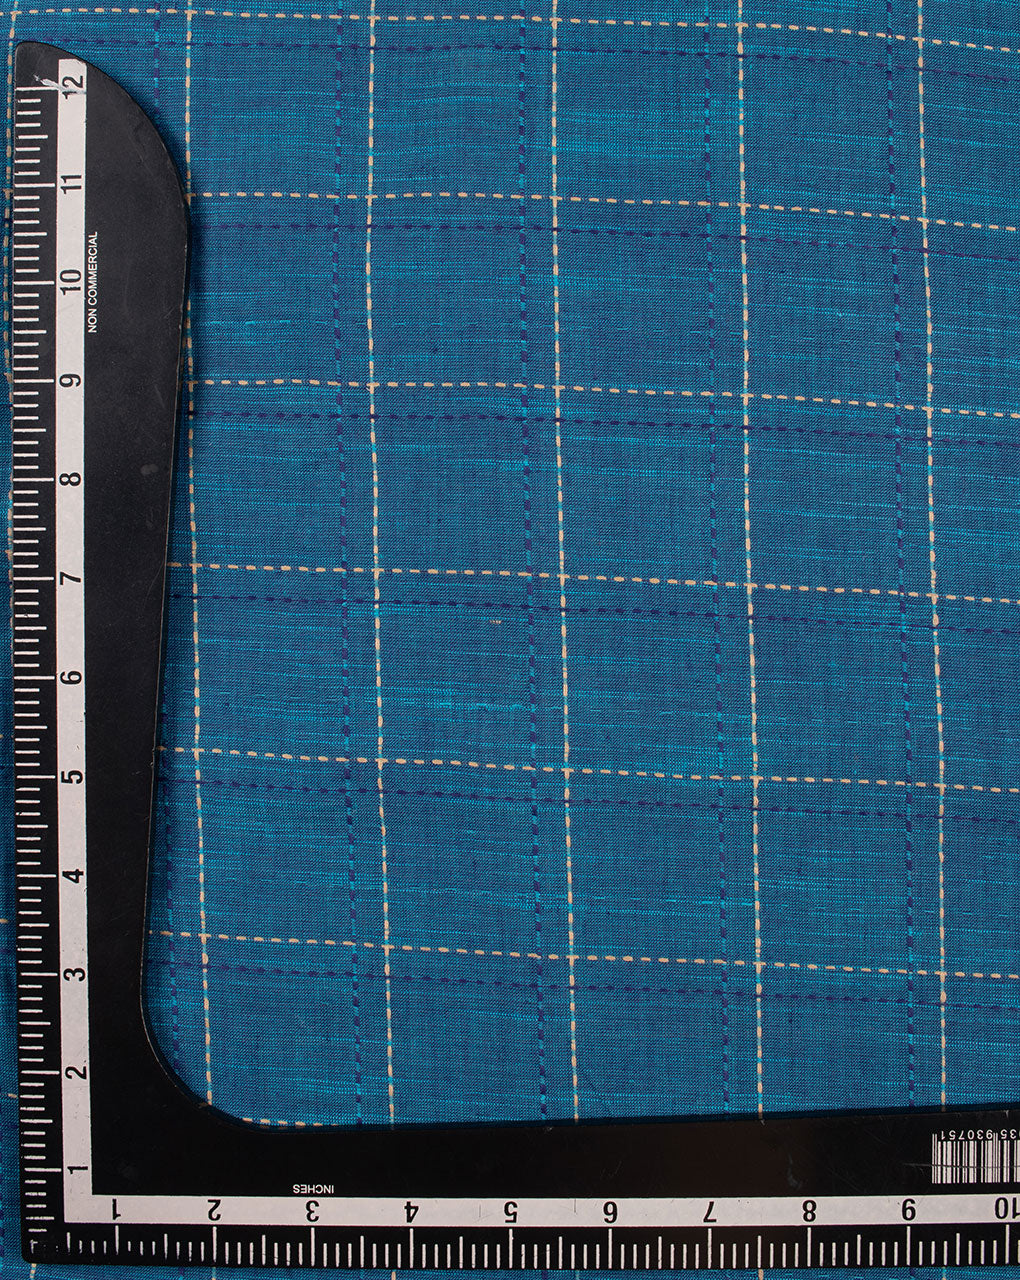 Checks Woven Kantha Loom Textured Cotton Fabric - Fabriclore.com